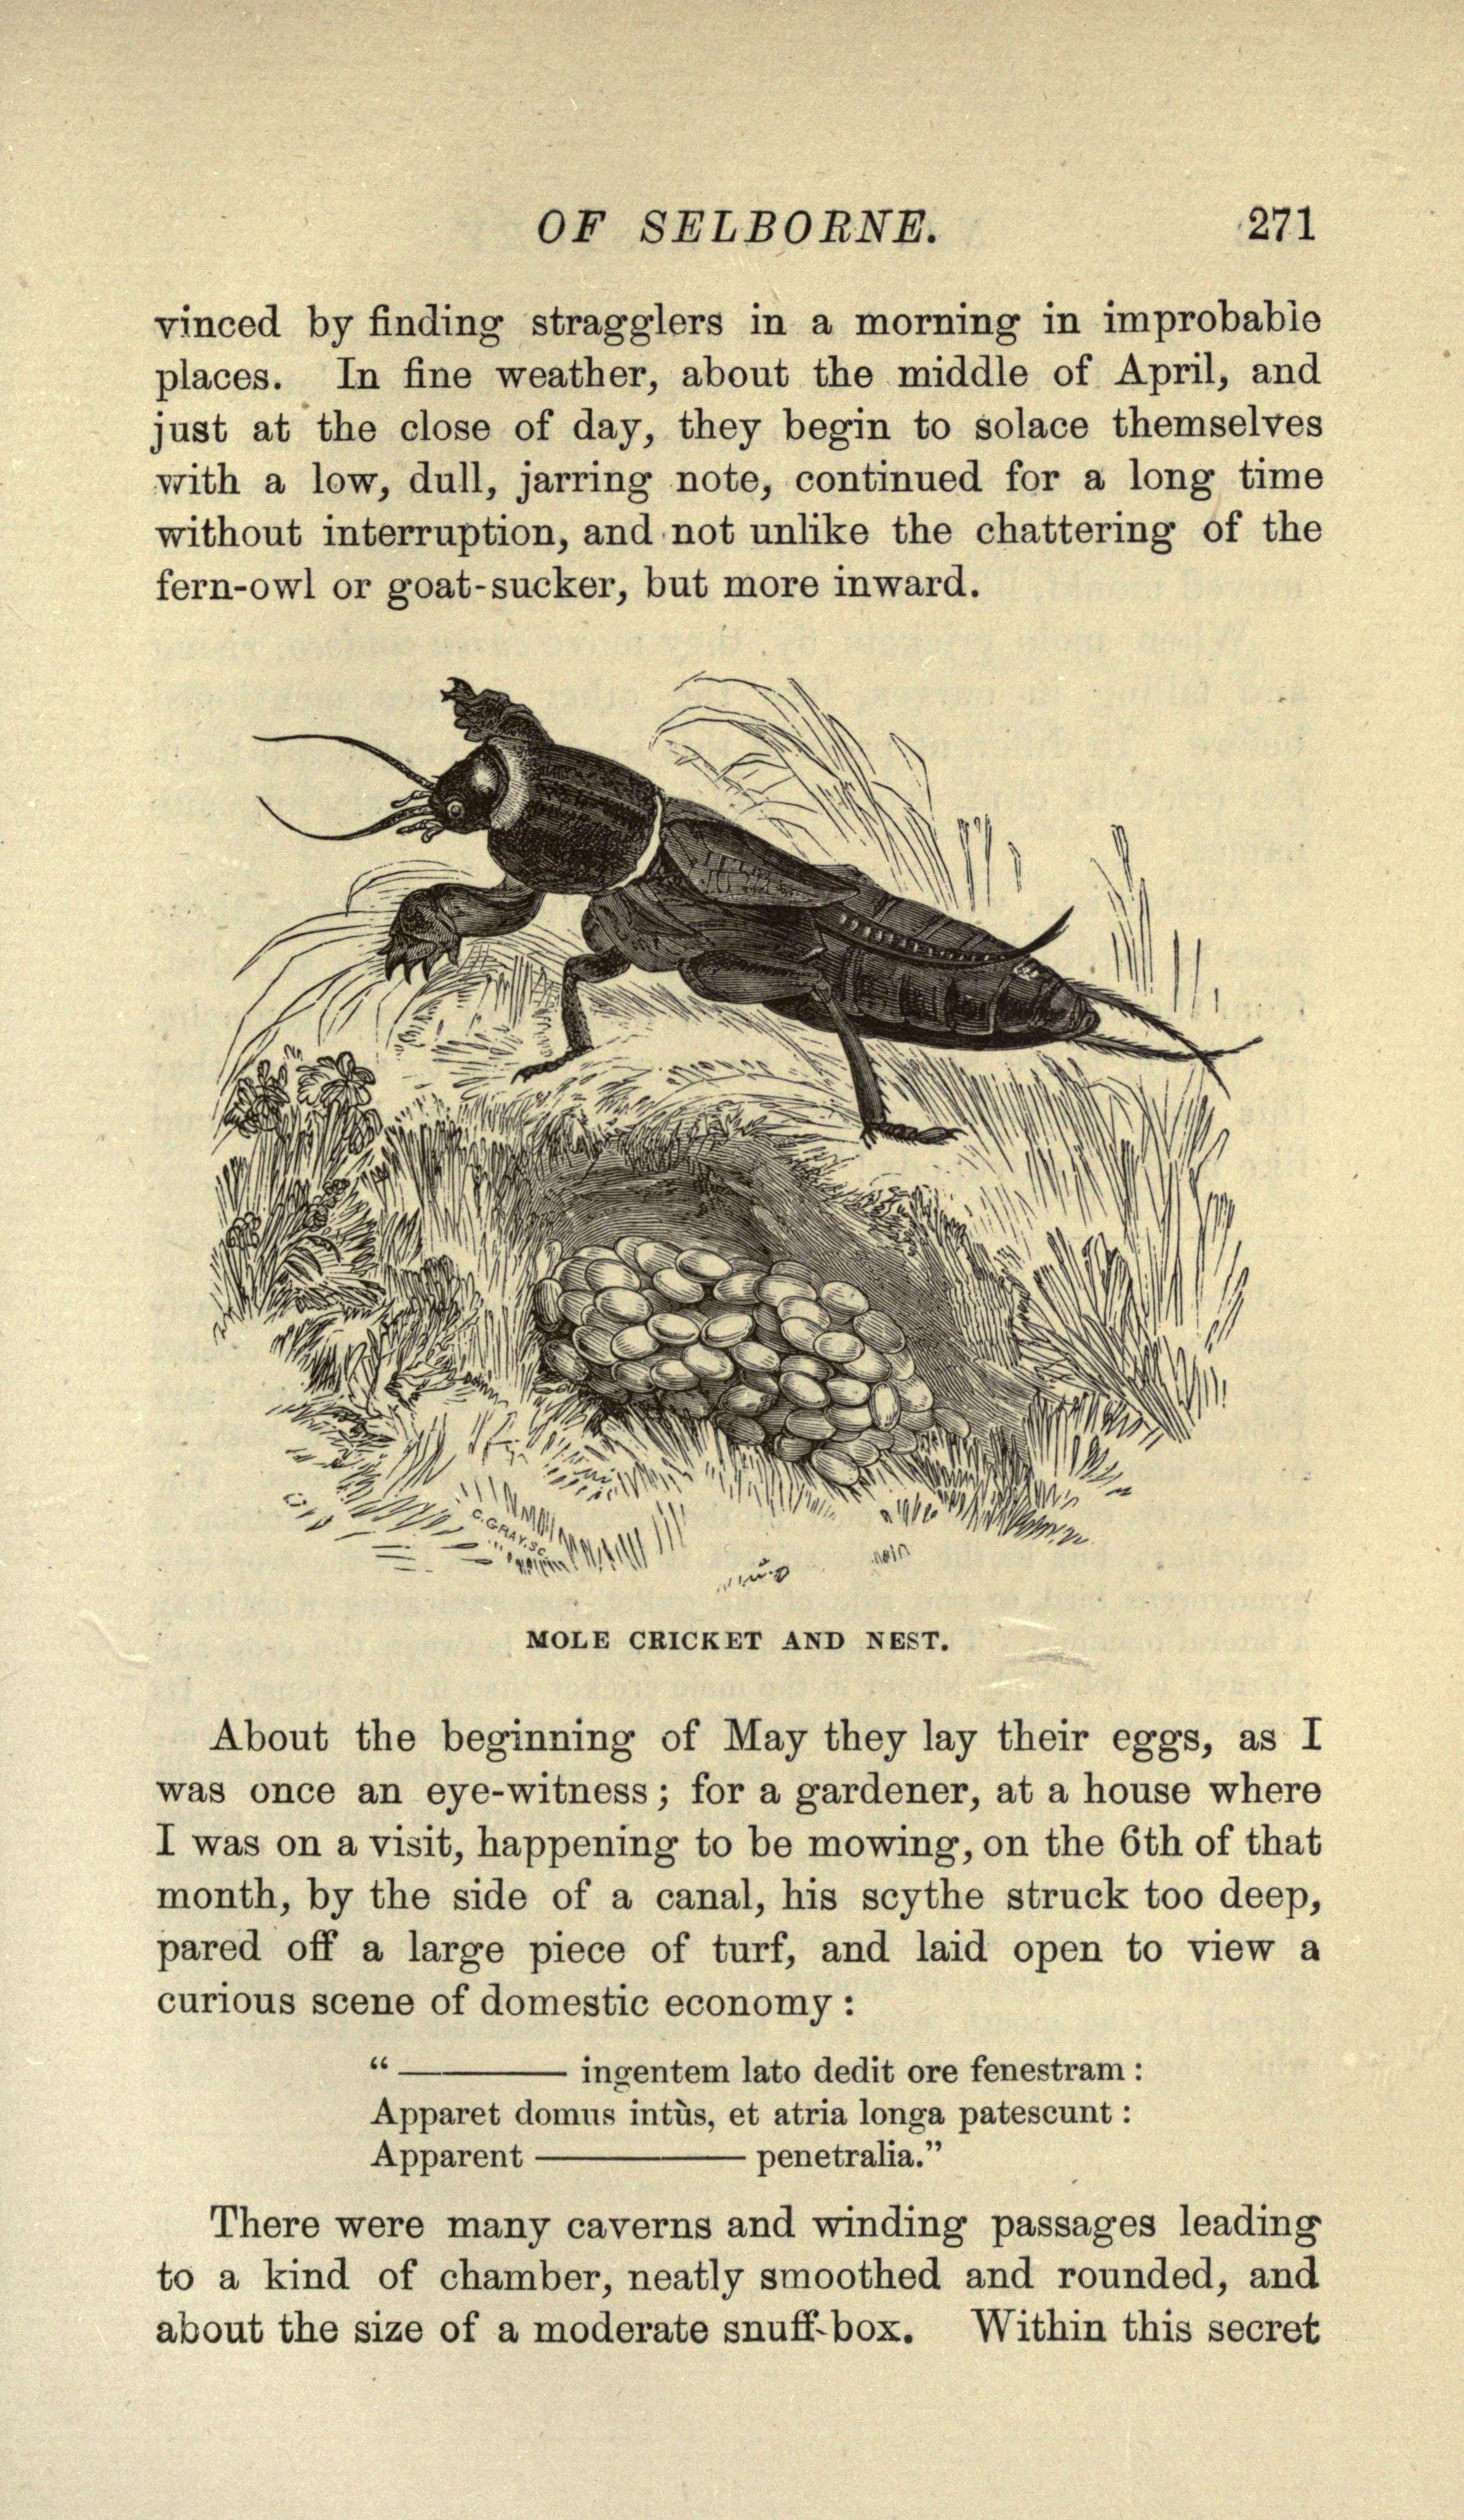 Image of European Mole Cricket